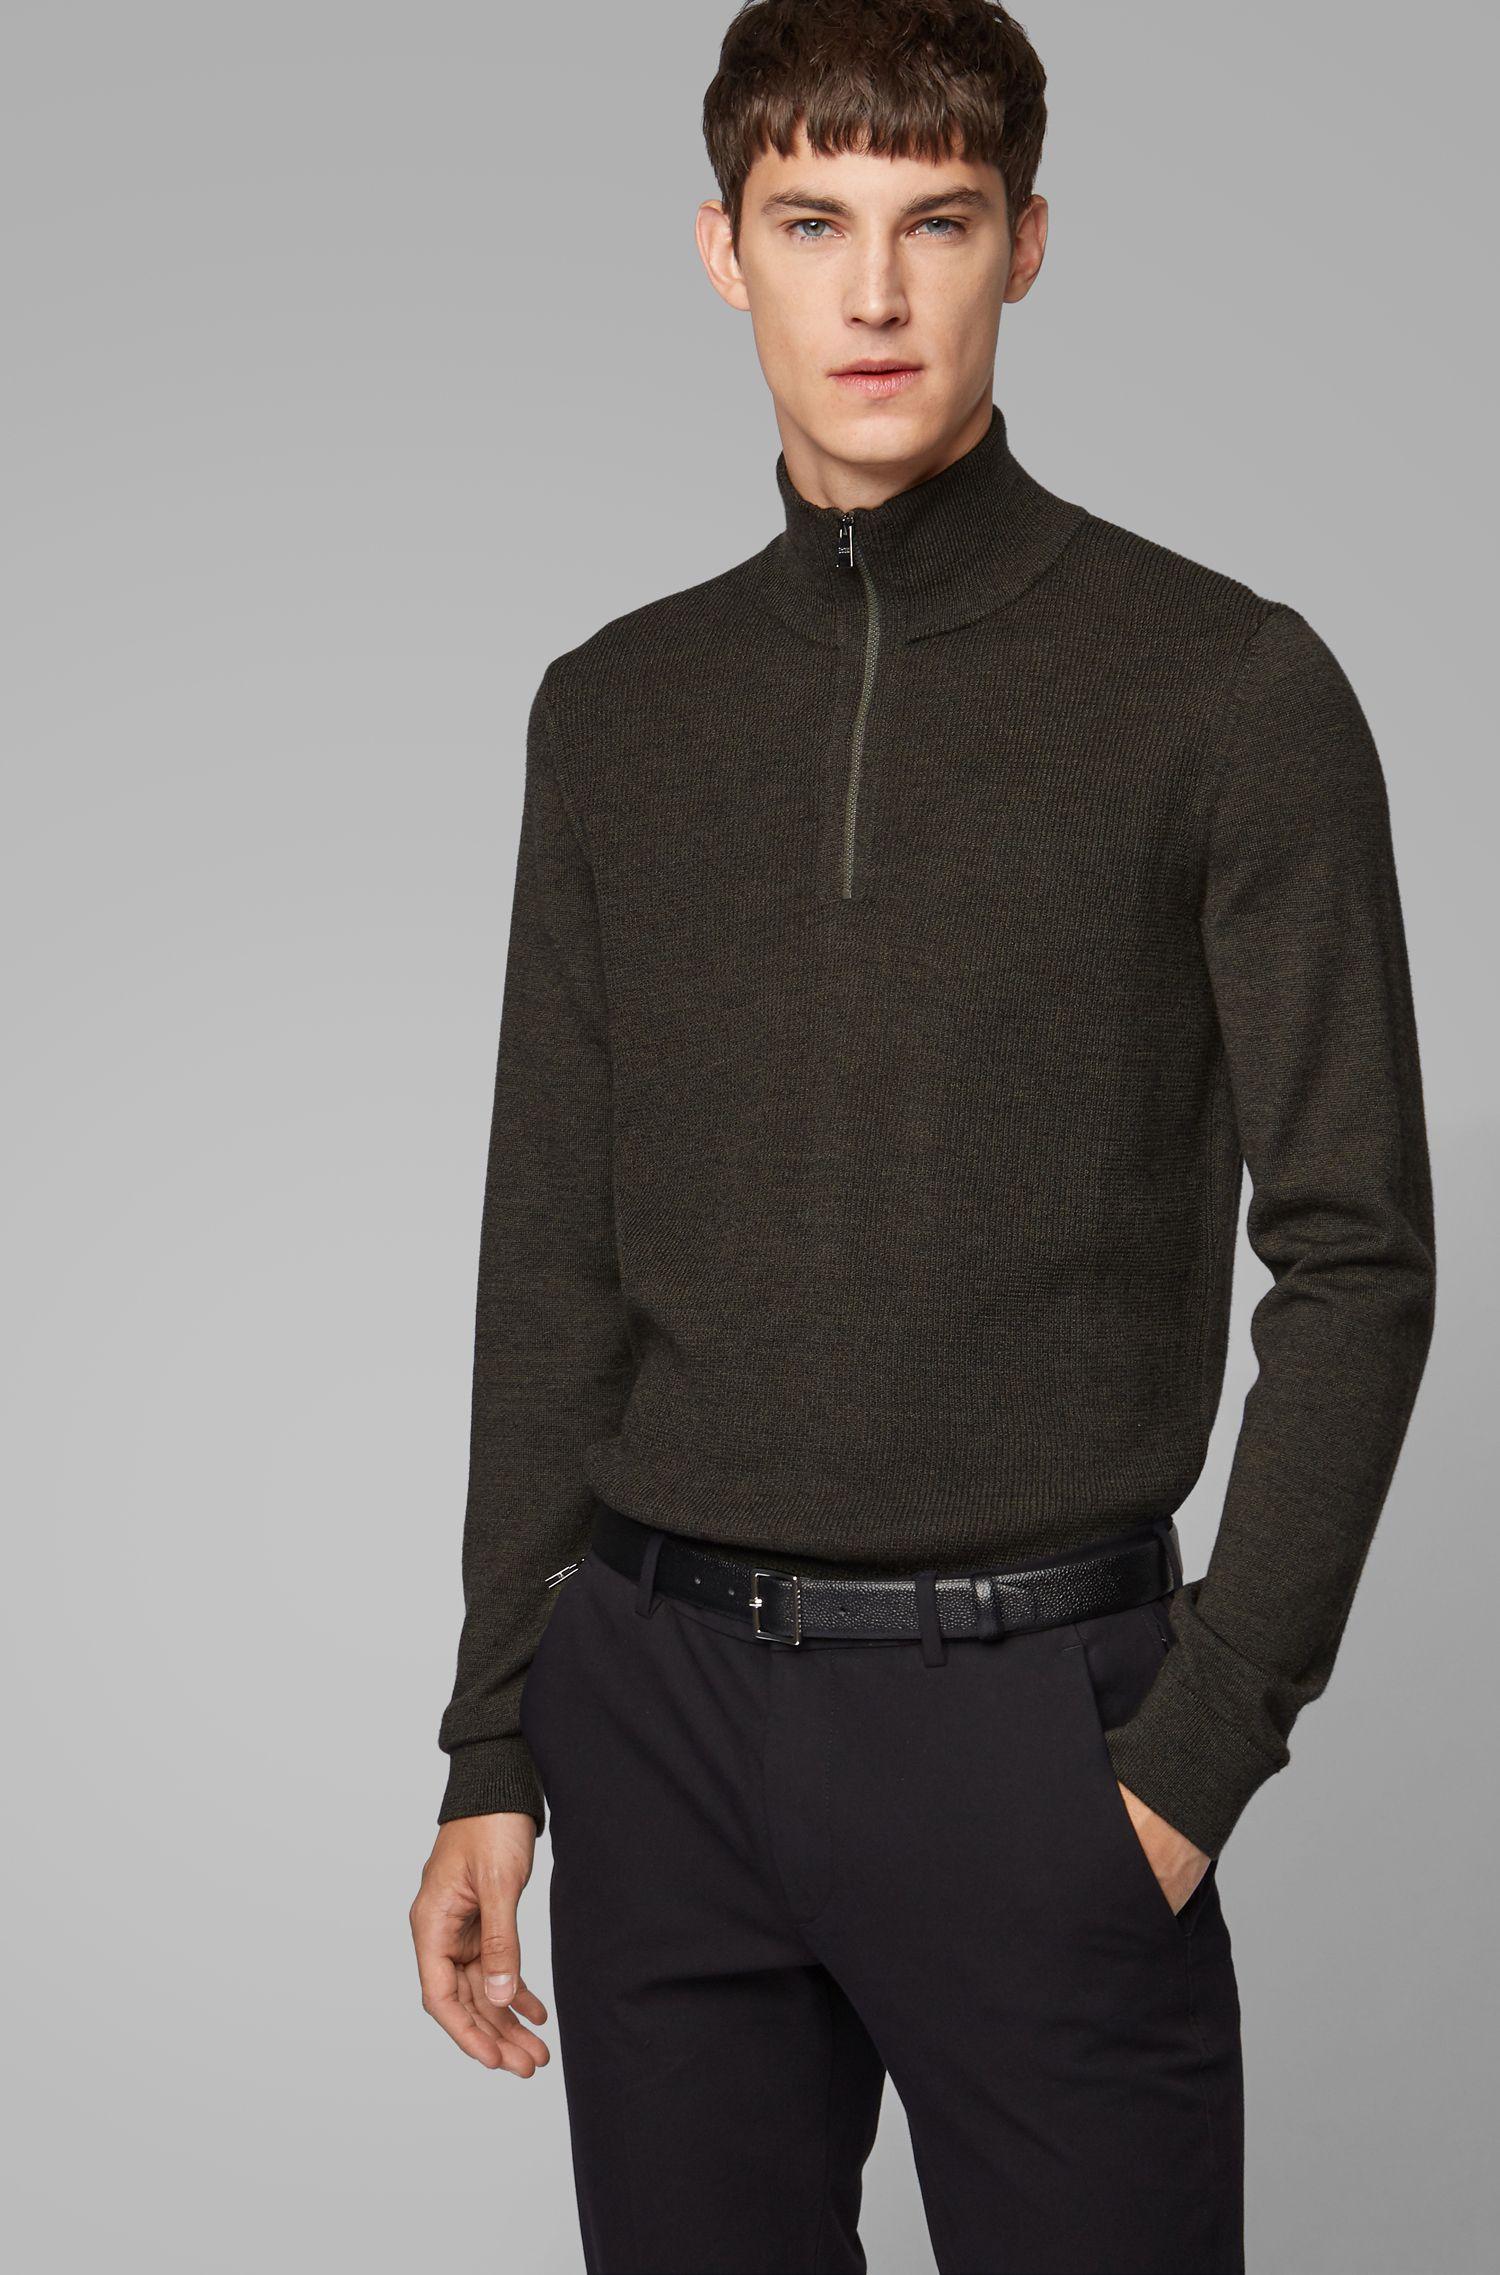 BOSS Regular-fit Sweater In Virgin Wool With Zipper Neck for Men - Lyst